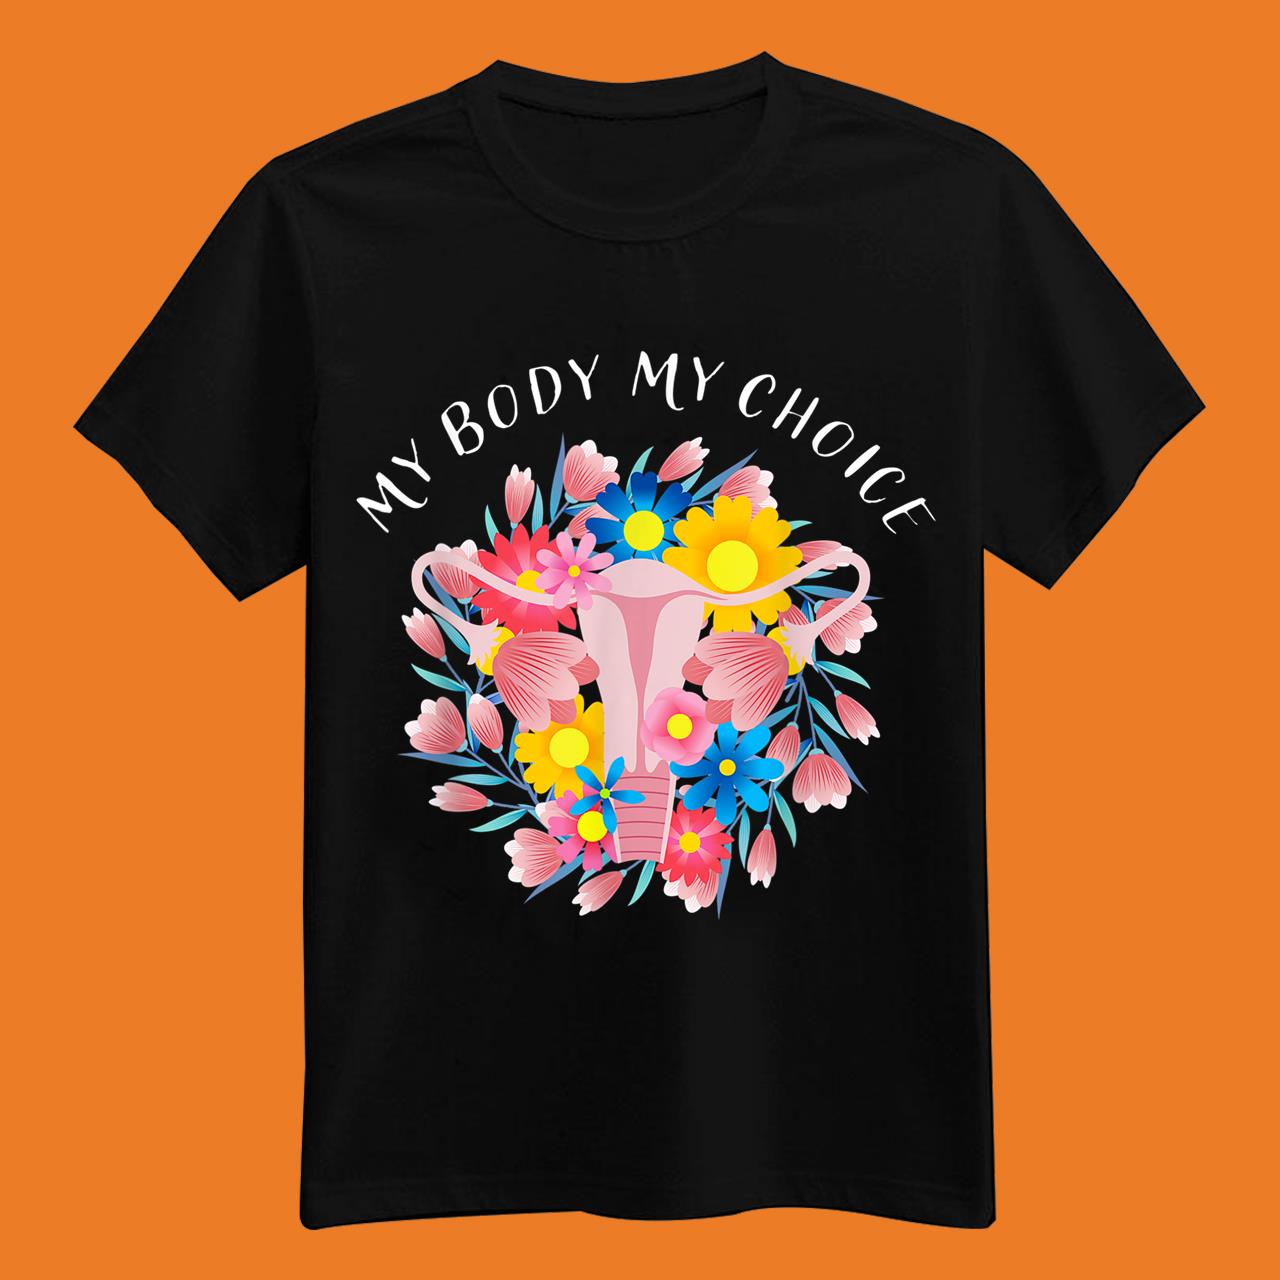 My Body My Choice Pro Choice Feminist Abortion Rights T-Shirt